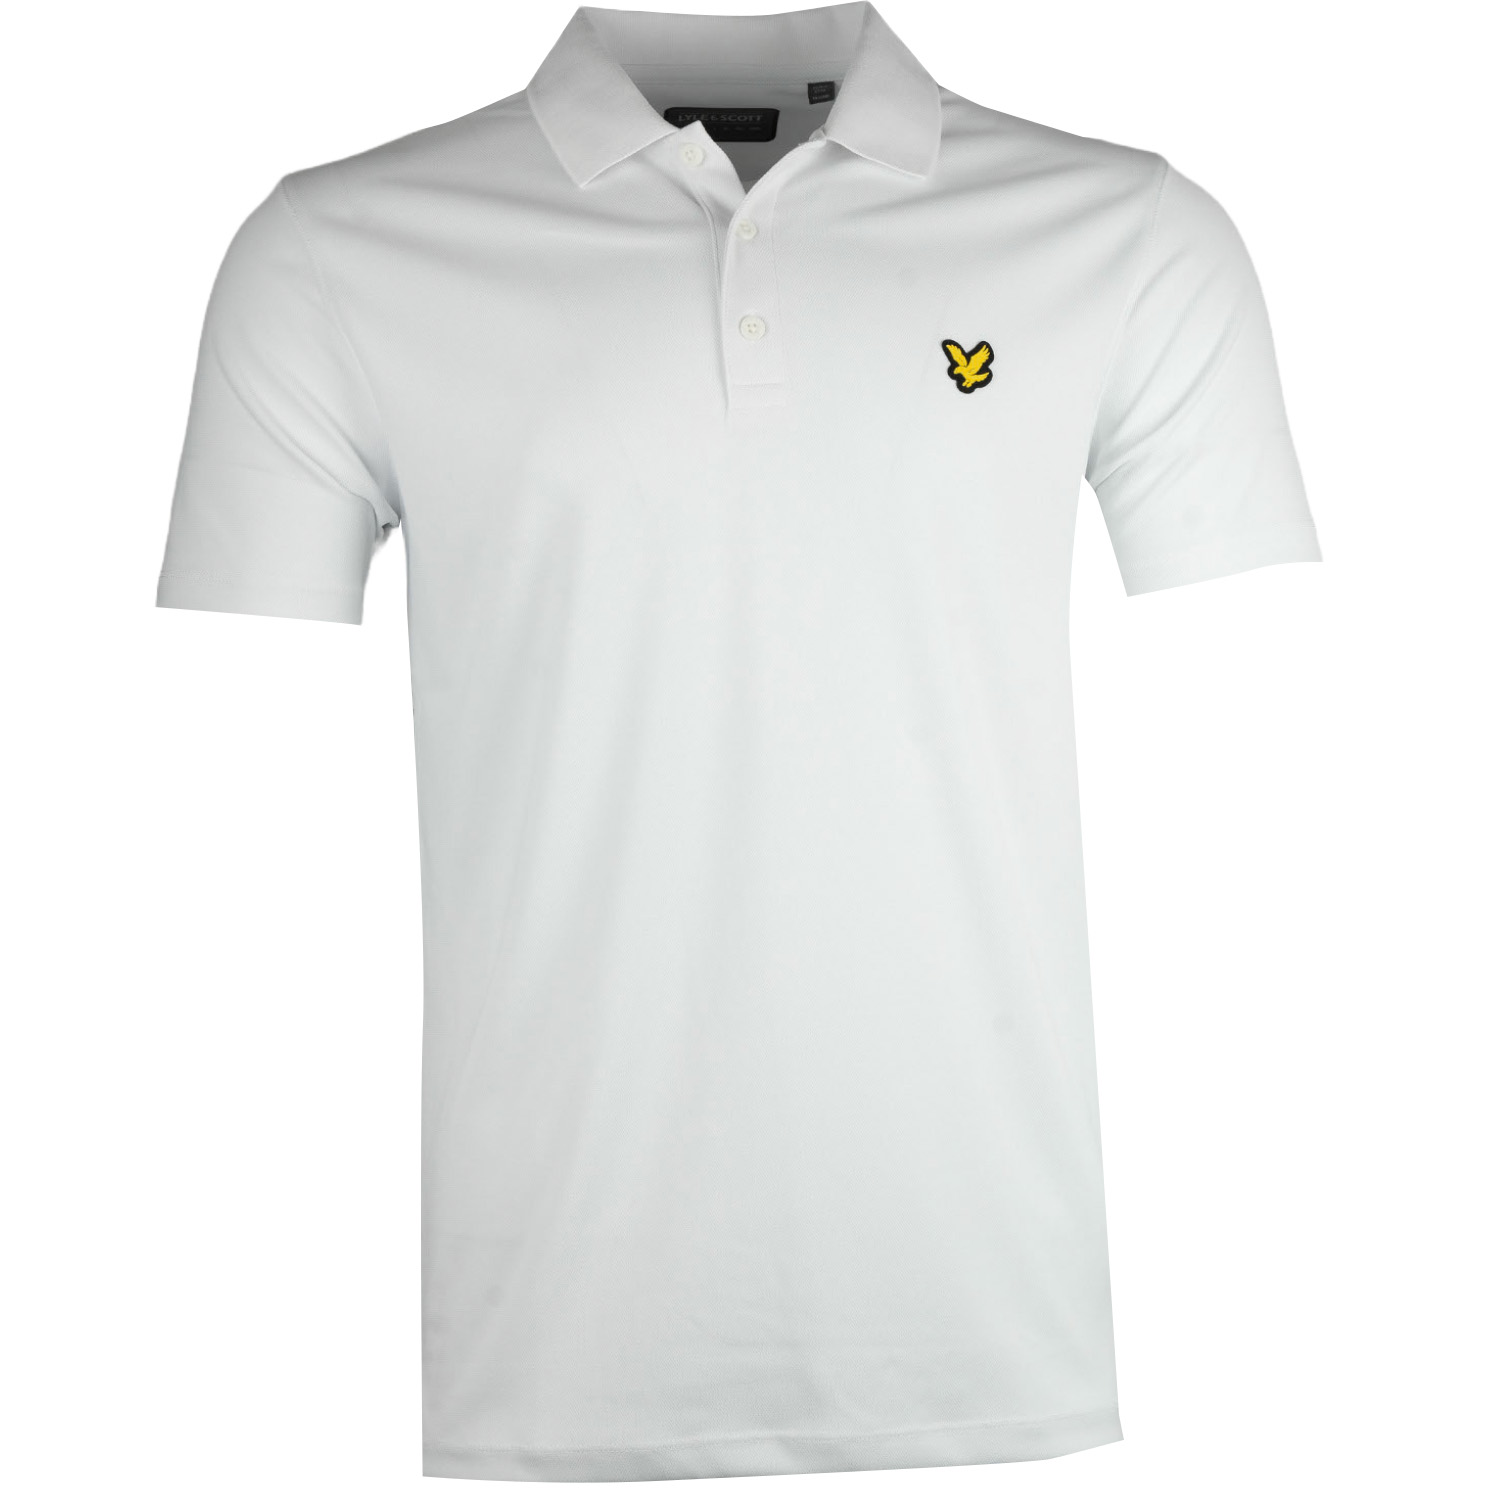 Lyle & Scott Golf Tech Polo Shirt